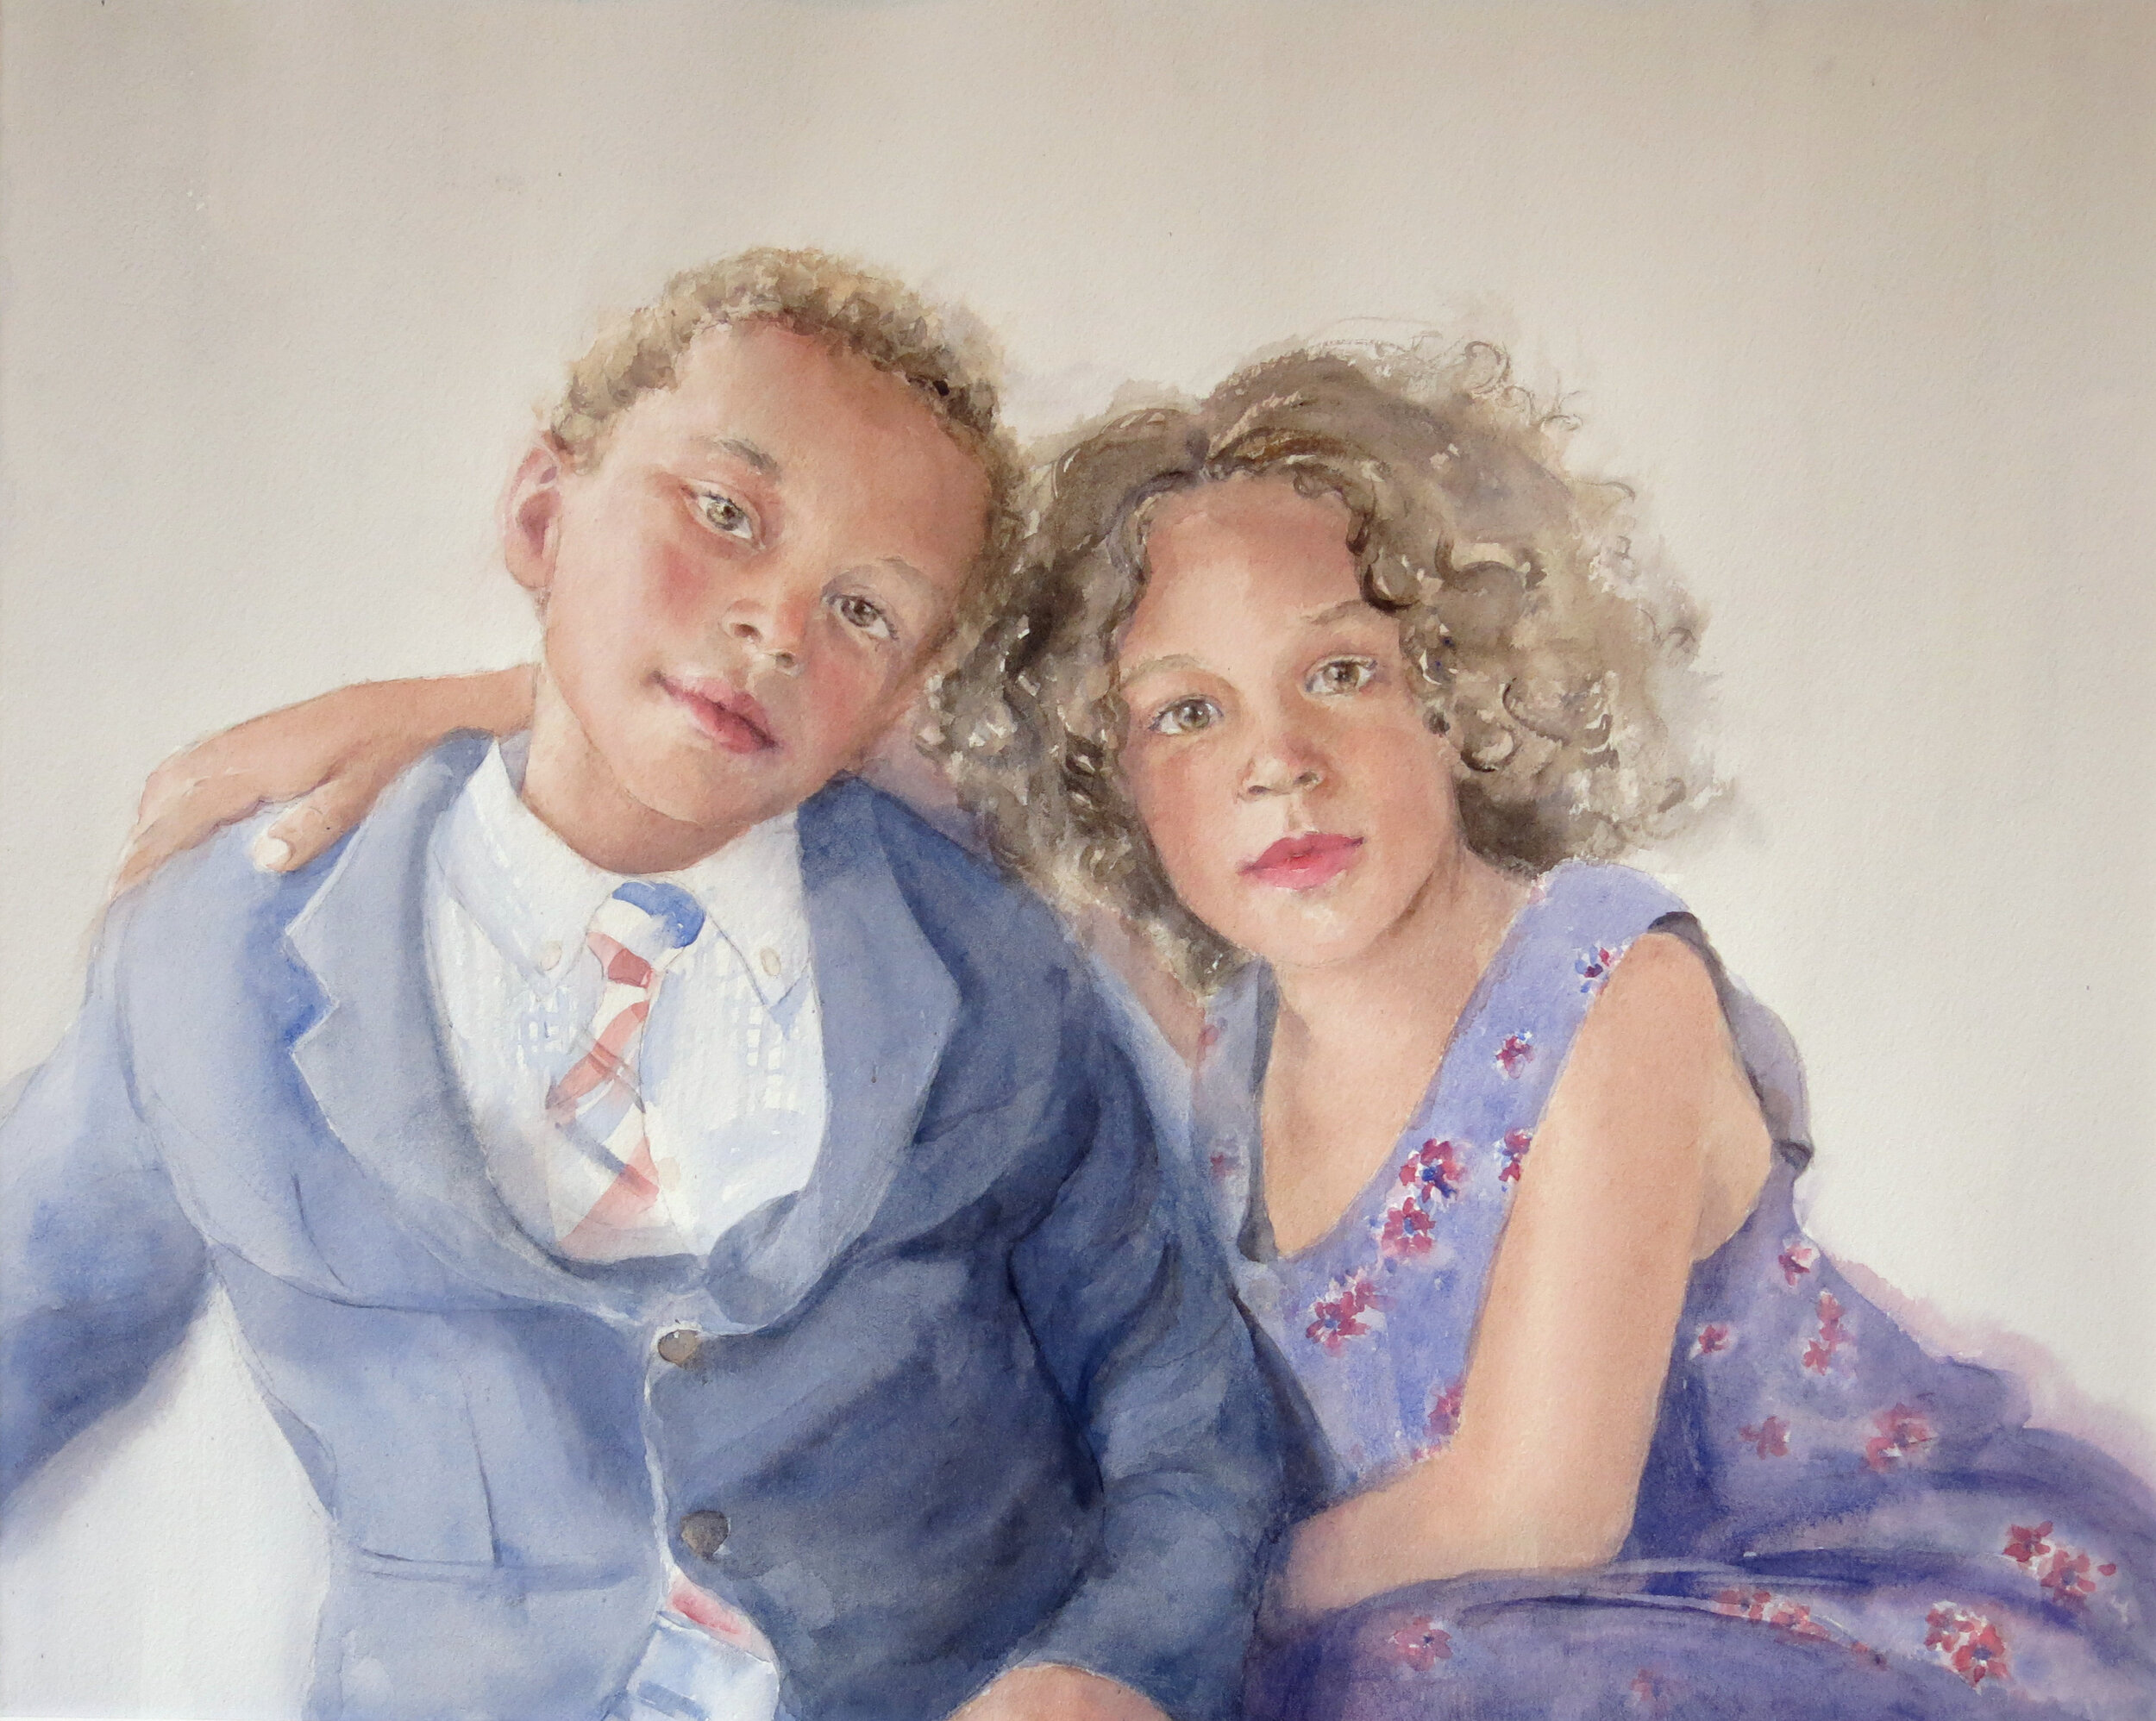   Ben and Liz   Watercolor on paper, 20 x 16”  SOLD 